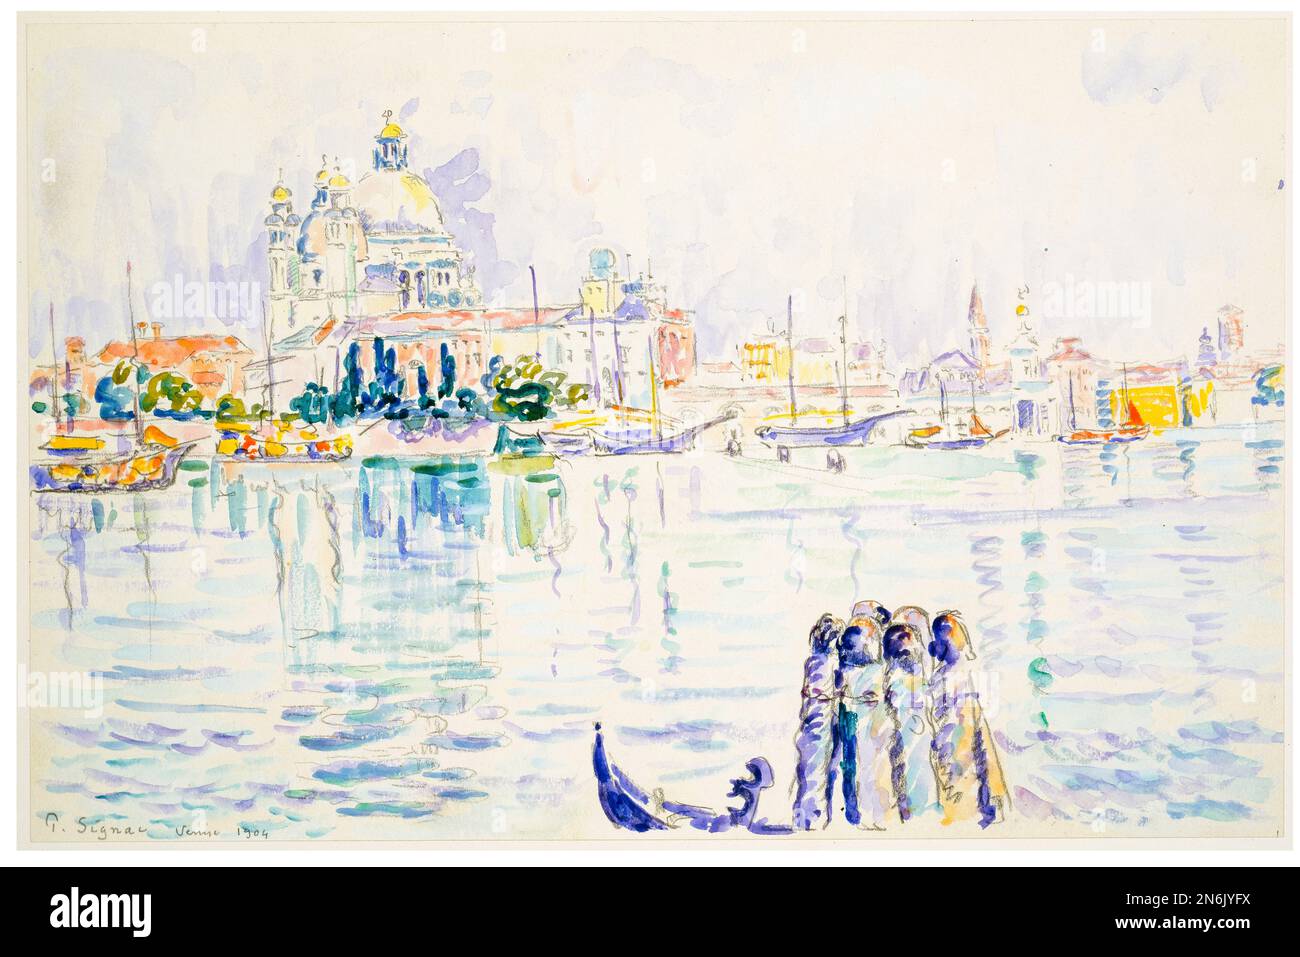 Venezia: Canal Grande, pittura paesaggistica in acquerello e matita di Paul Signac, 1904 Foto Stock